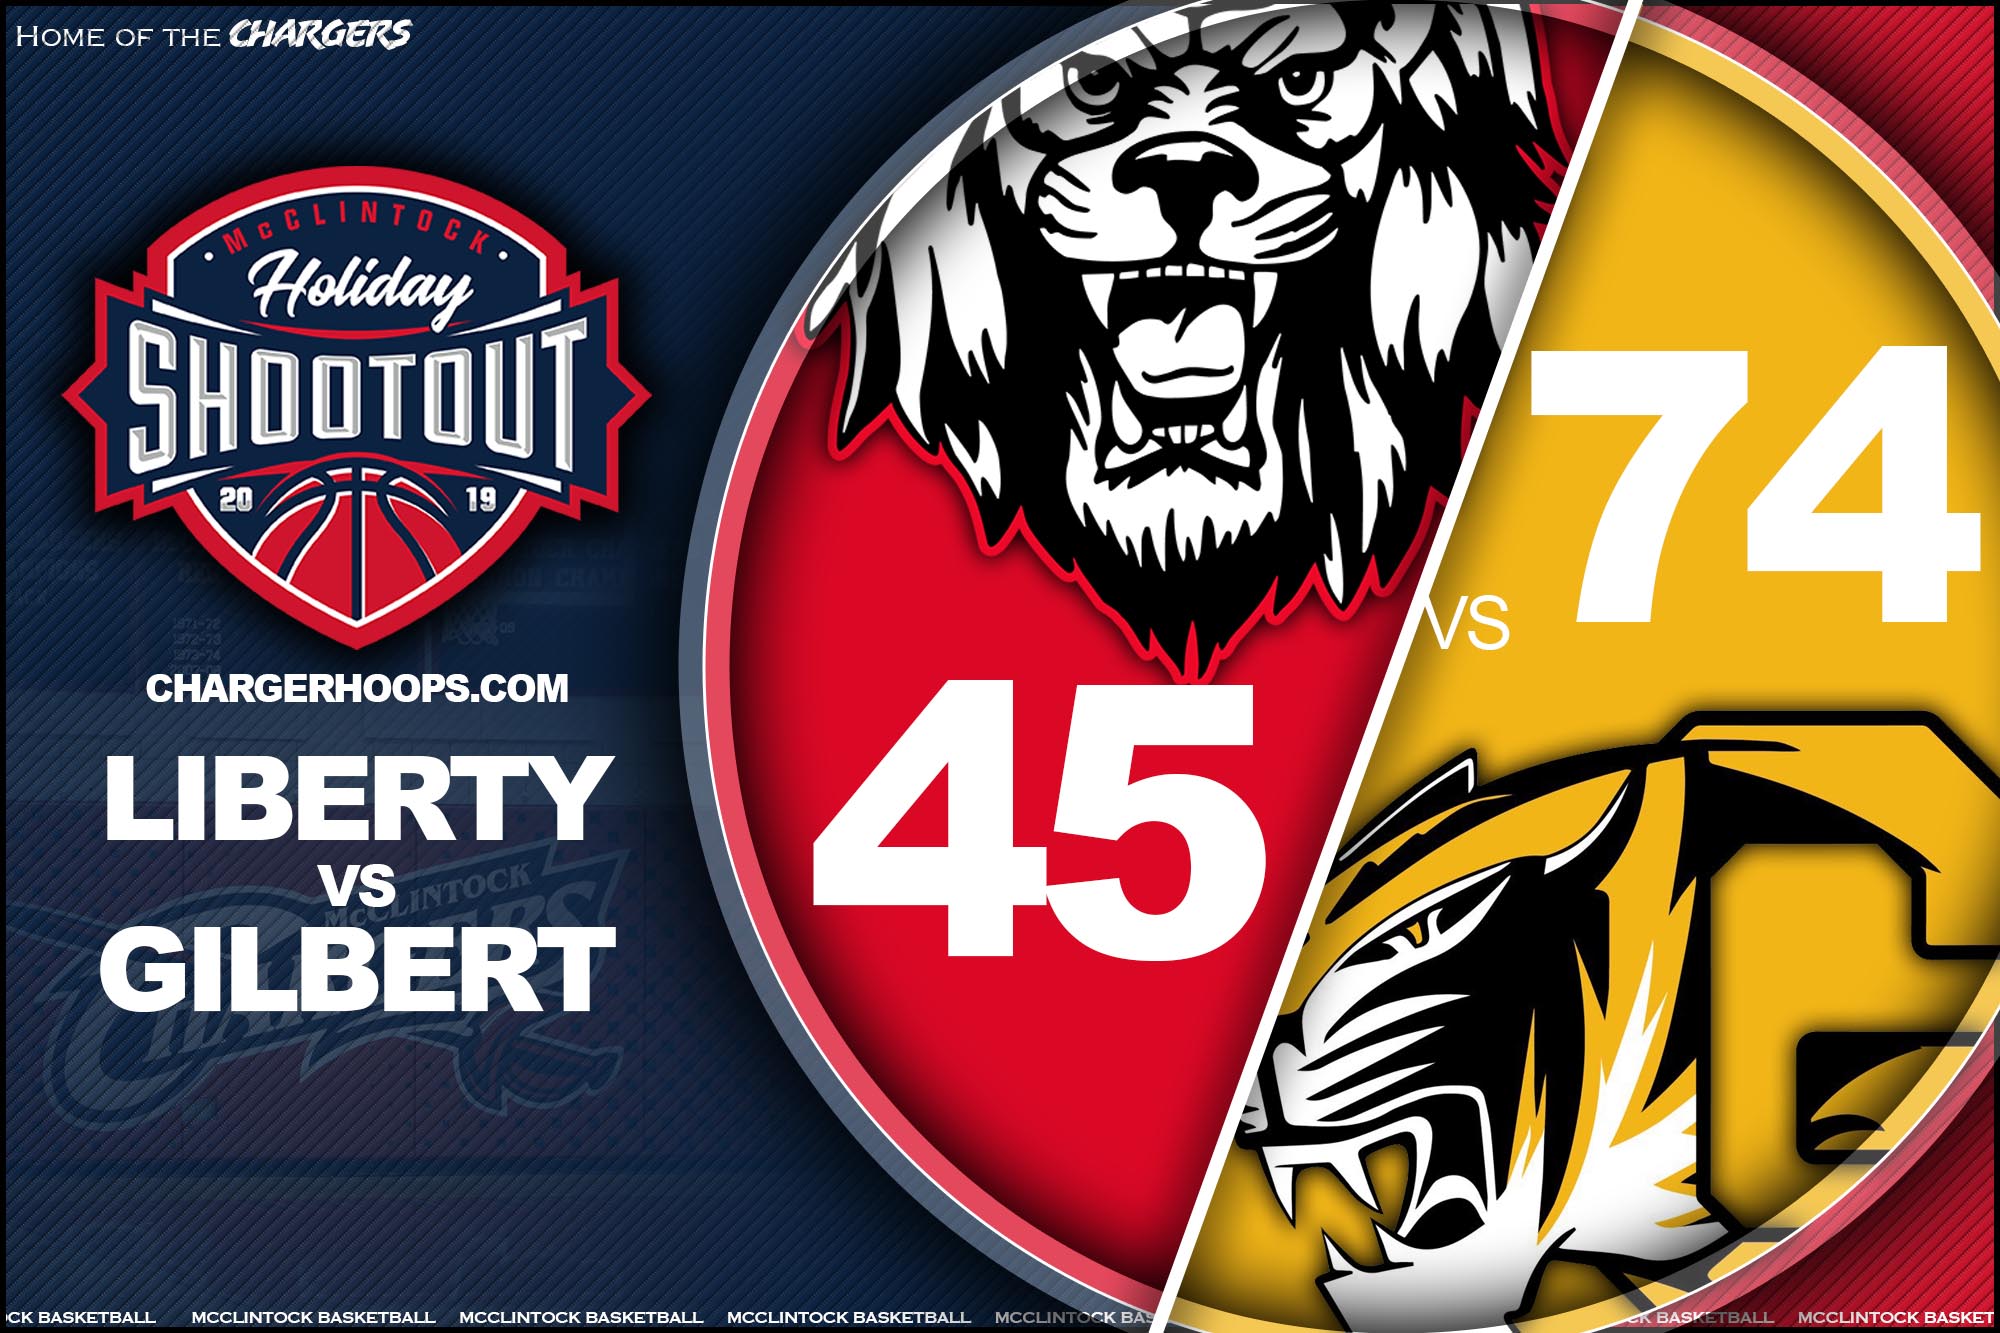 Game 5: Liberty 45 Gilbert 74 Final